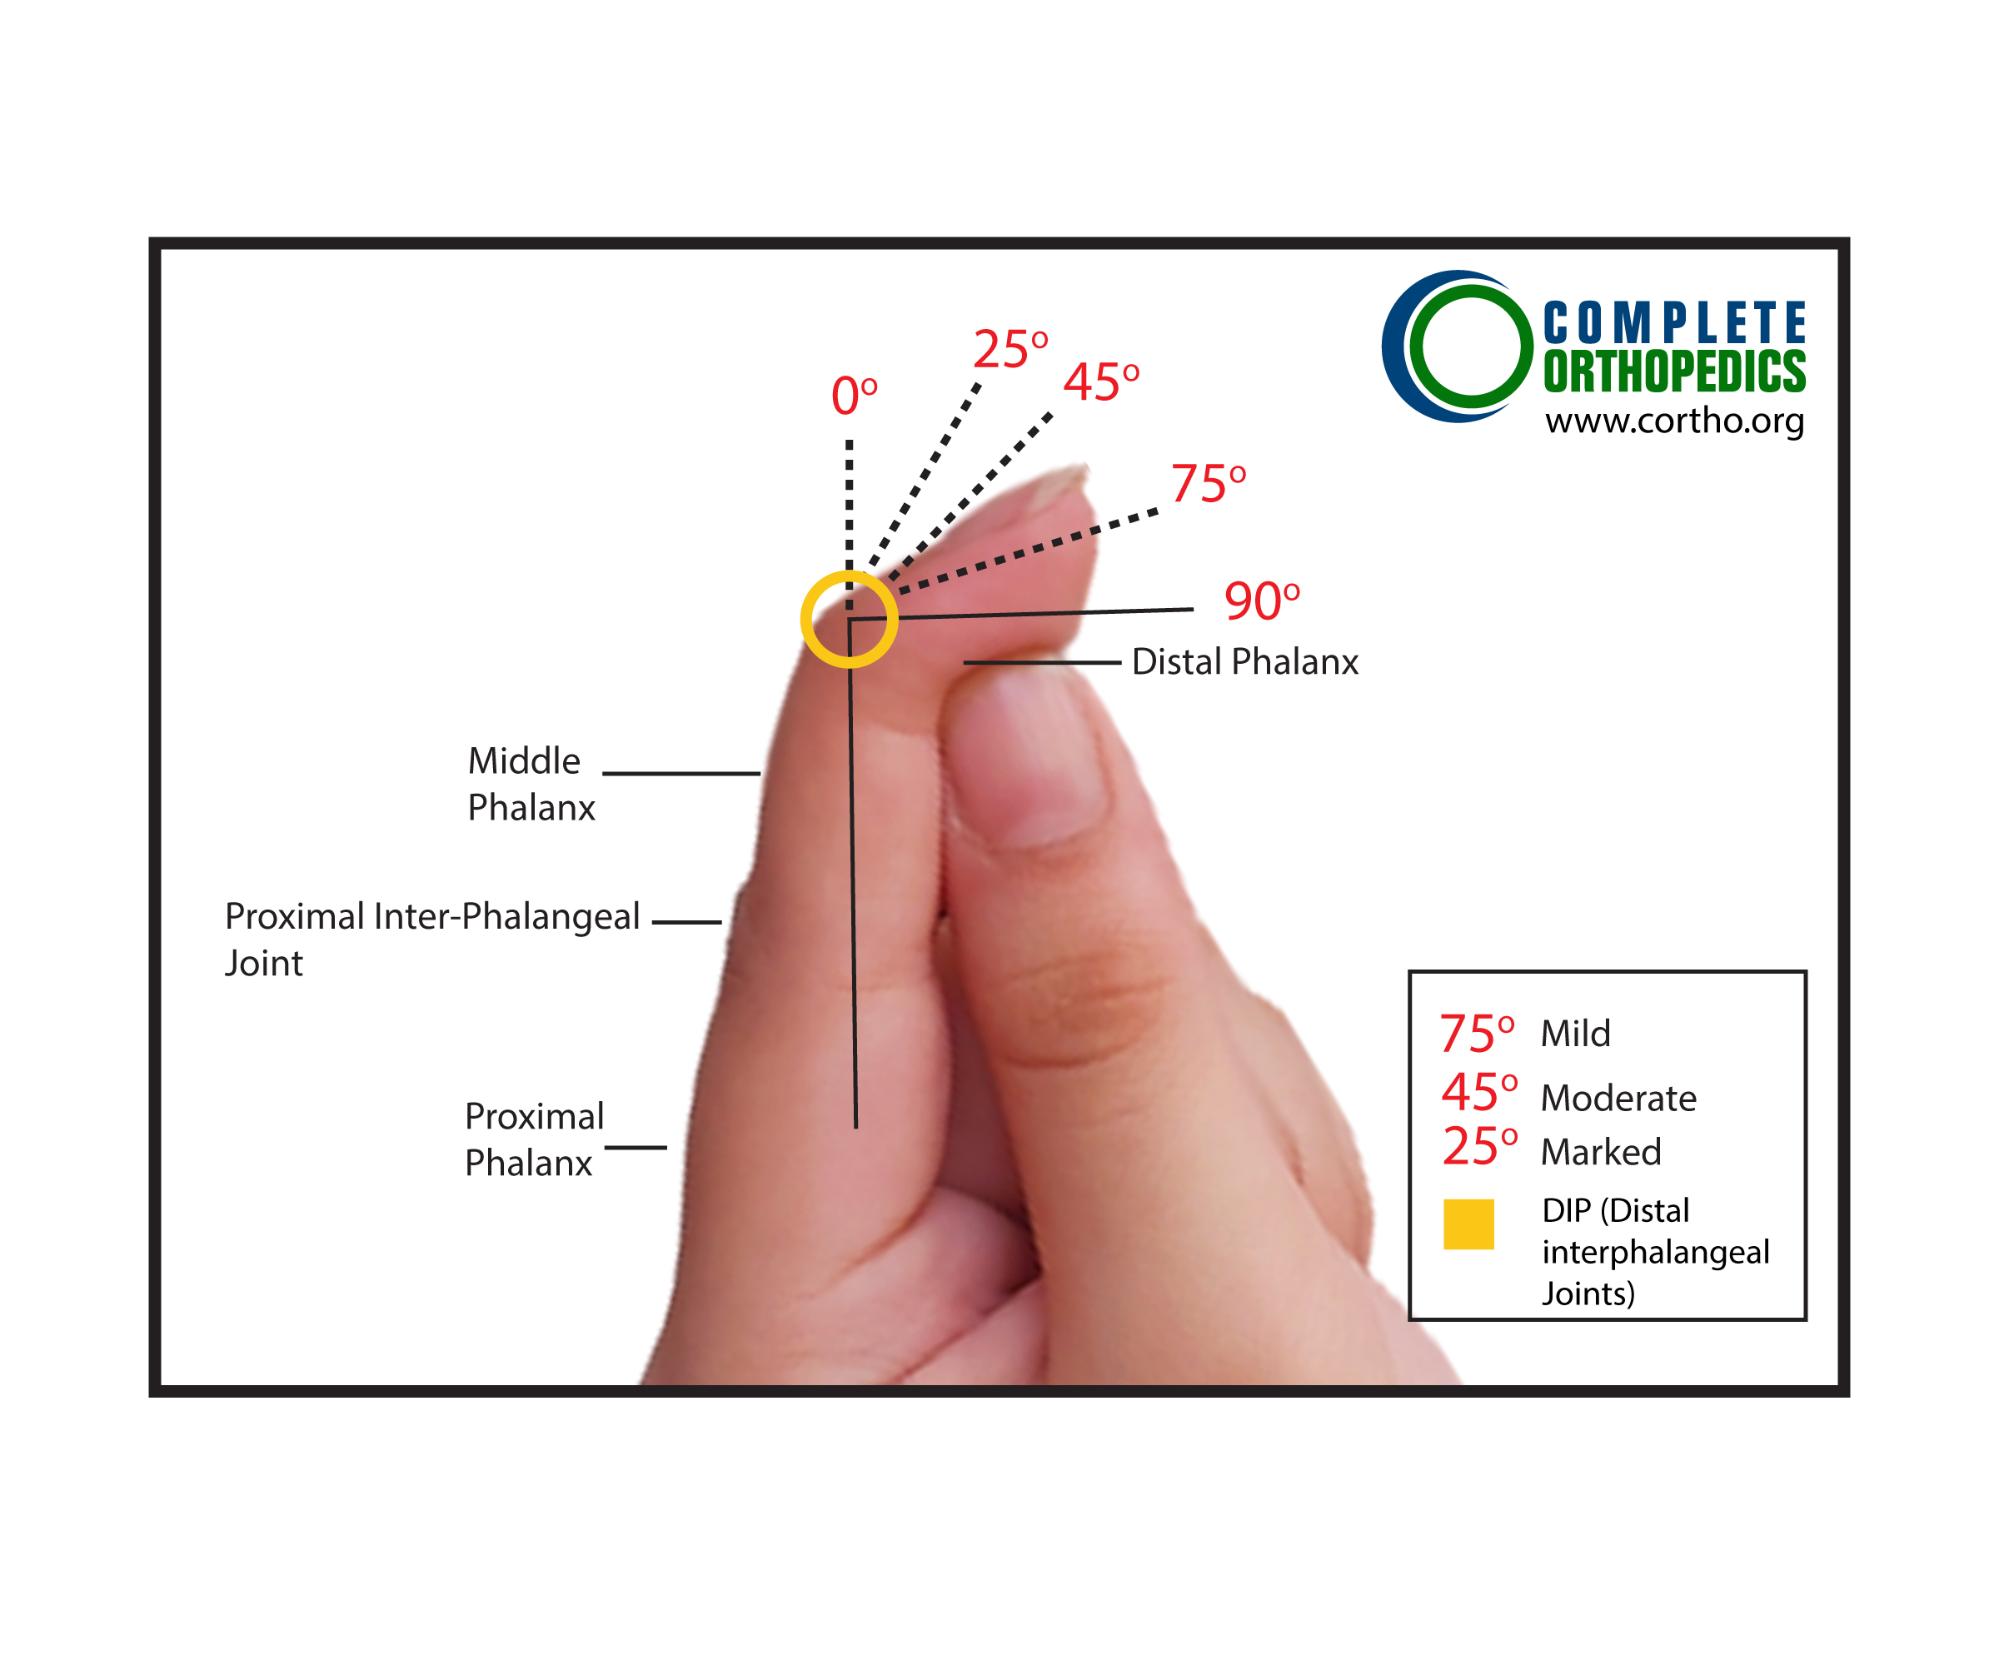 Measurement Position for Proximal Interphalangeal (PIP) Joint Measurement Position